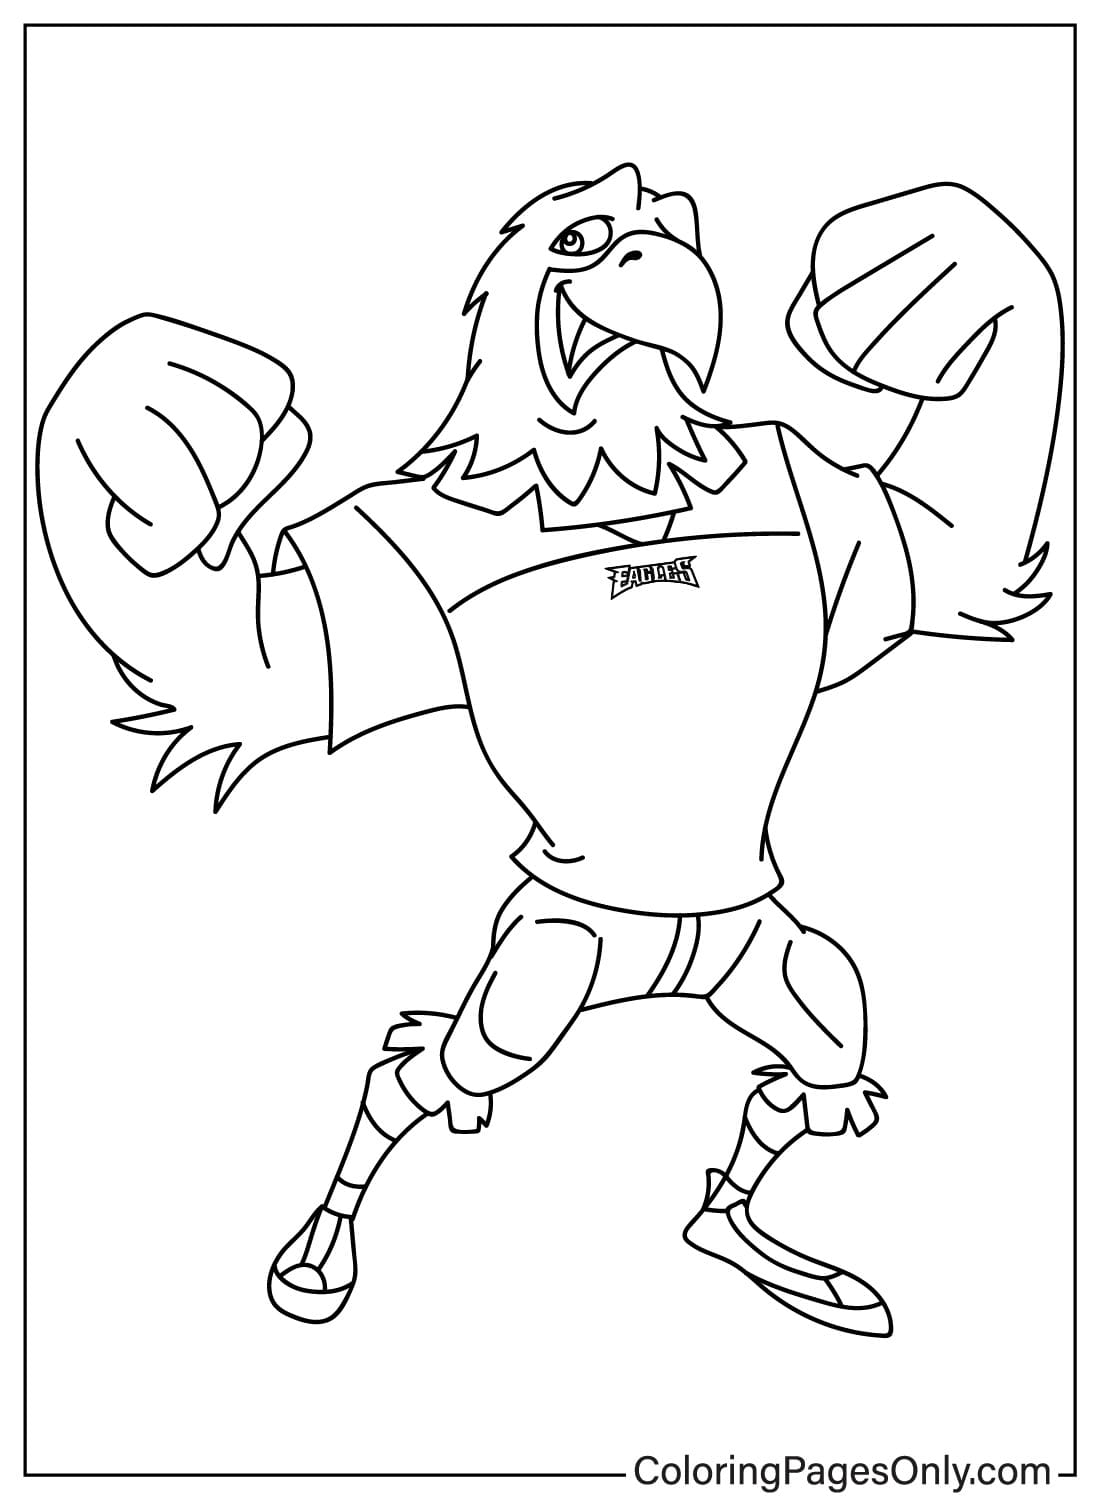 Бесплатная раскраска талисмана Свупа от Philadelphia Eagles